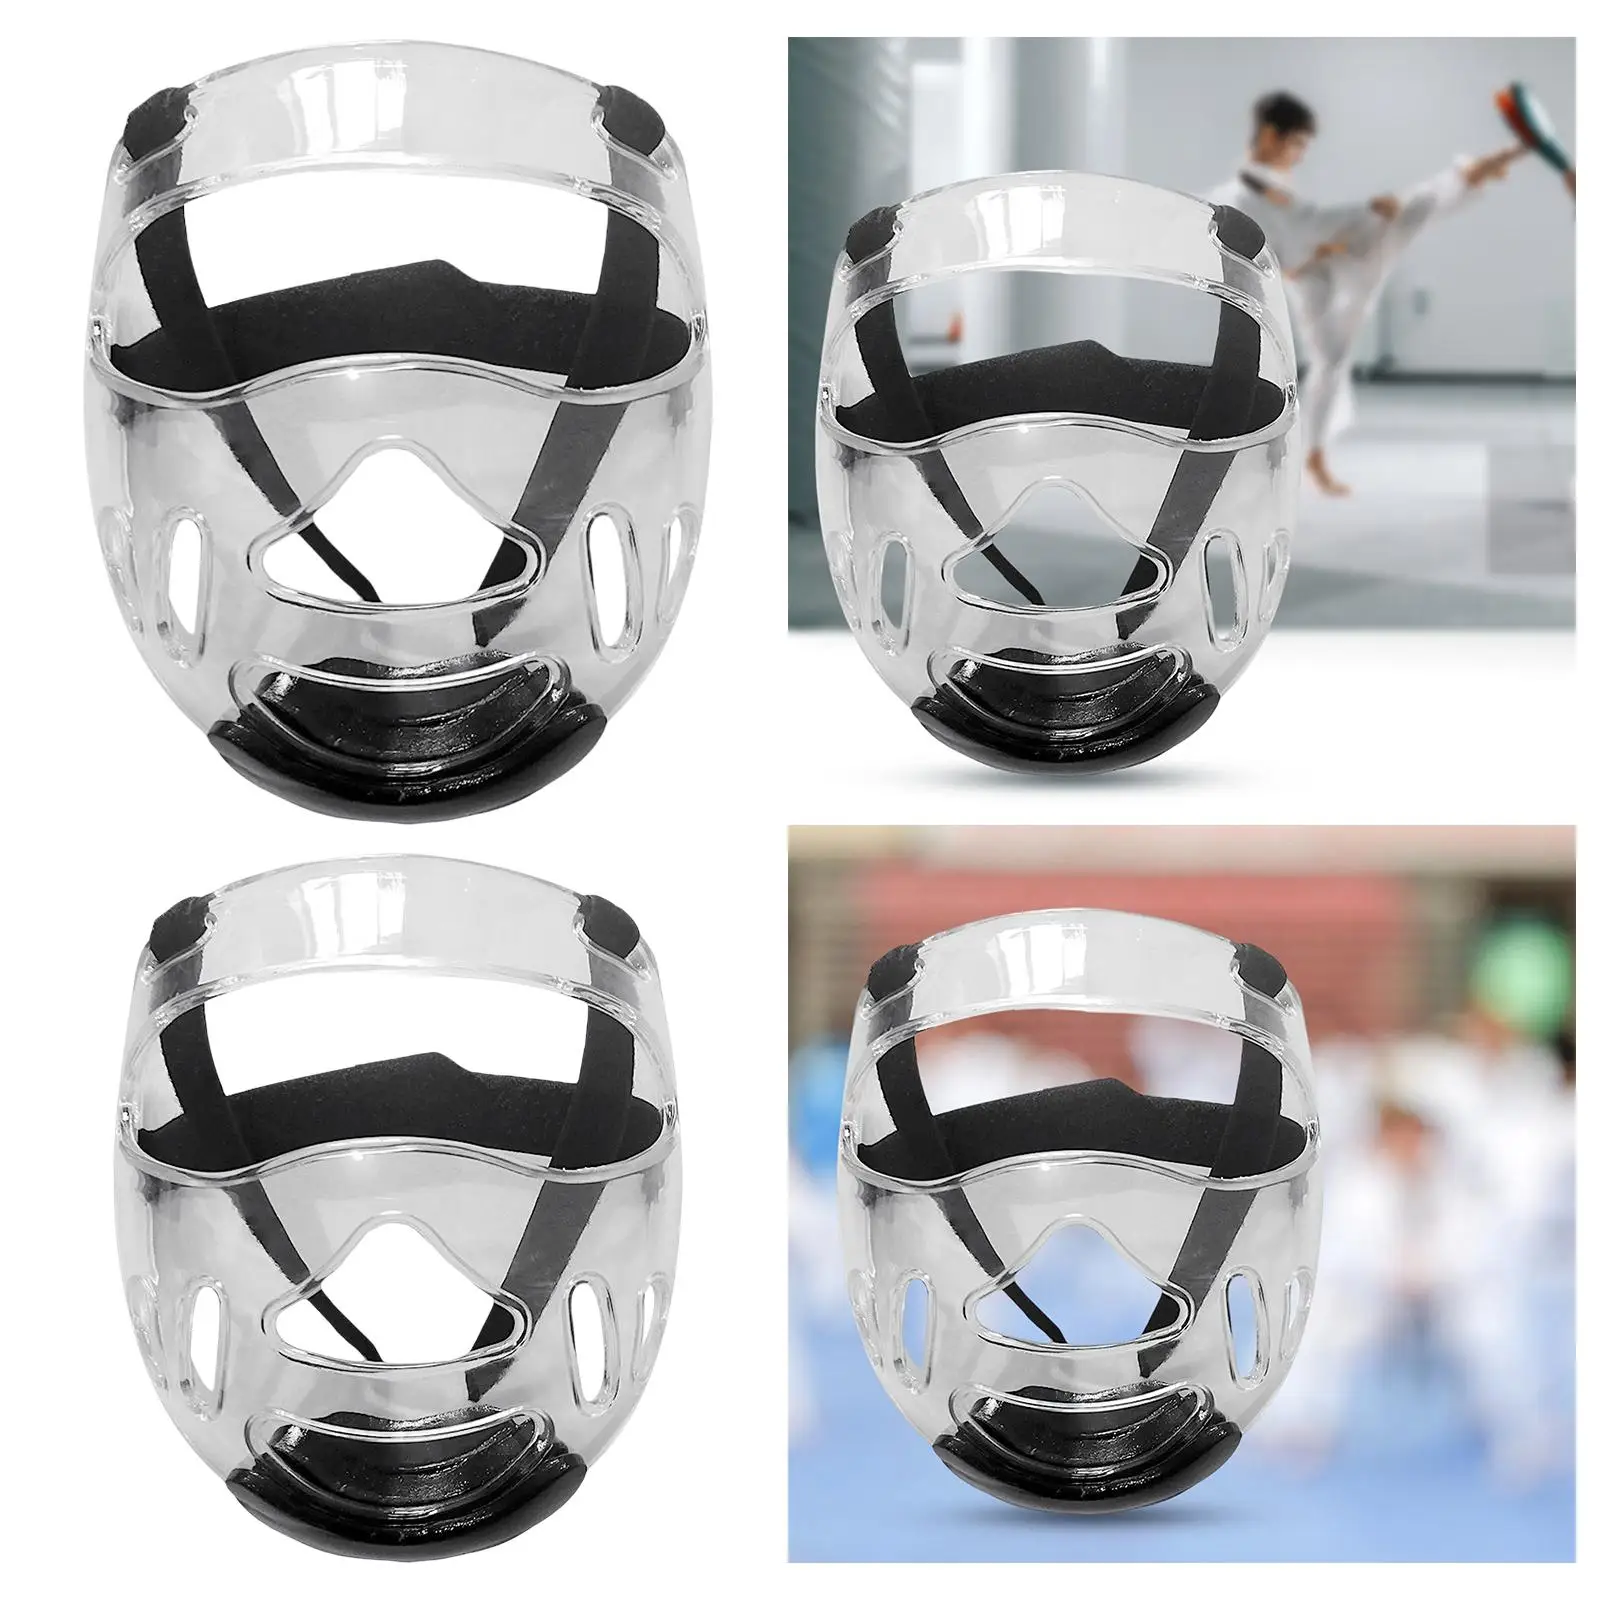 Taekwondo Face Shield Sports Gear Protective Mask Face Protection Cover for Taekwondo Boxing Improves Your Training Performance